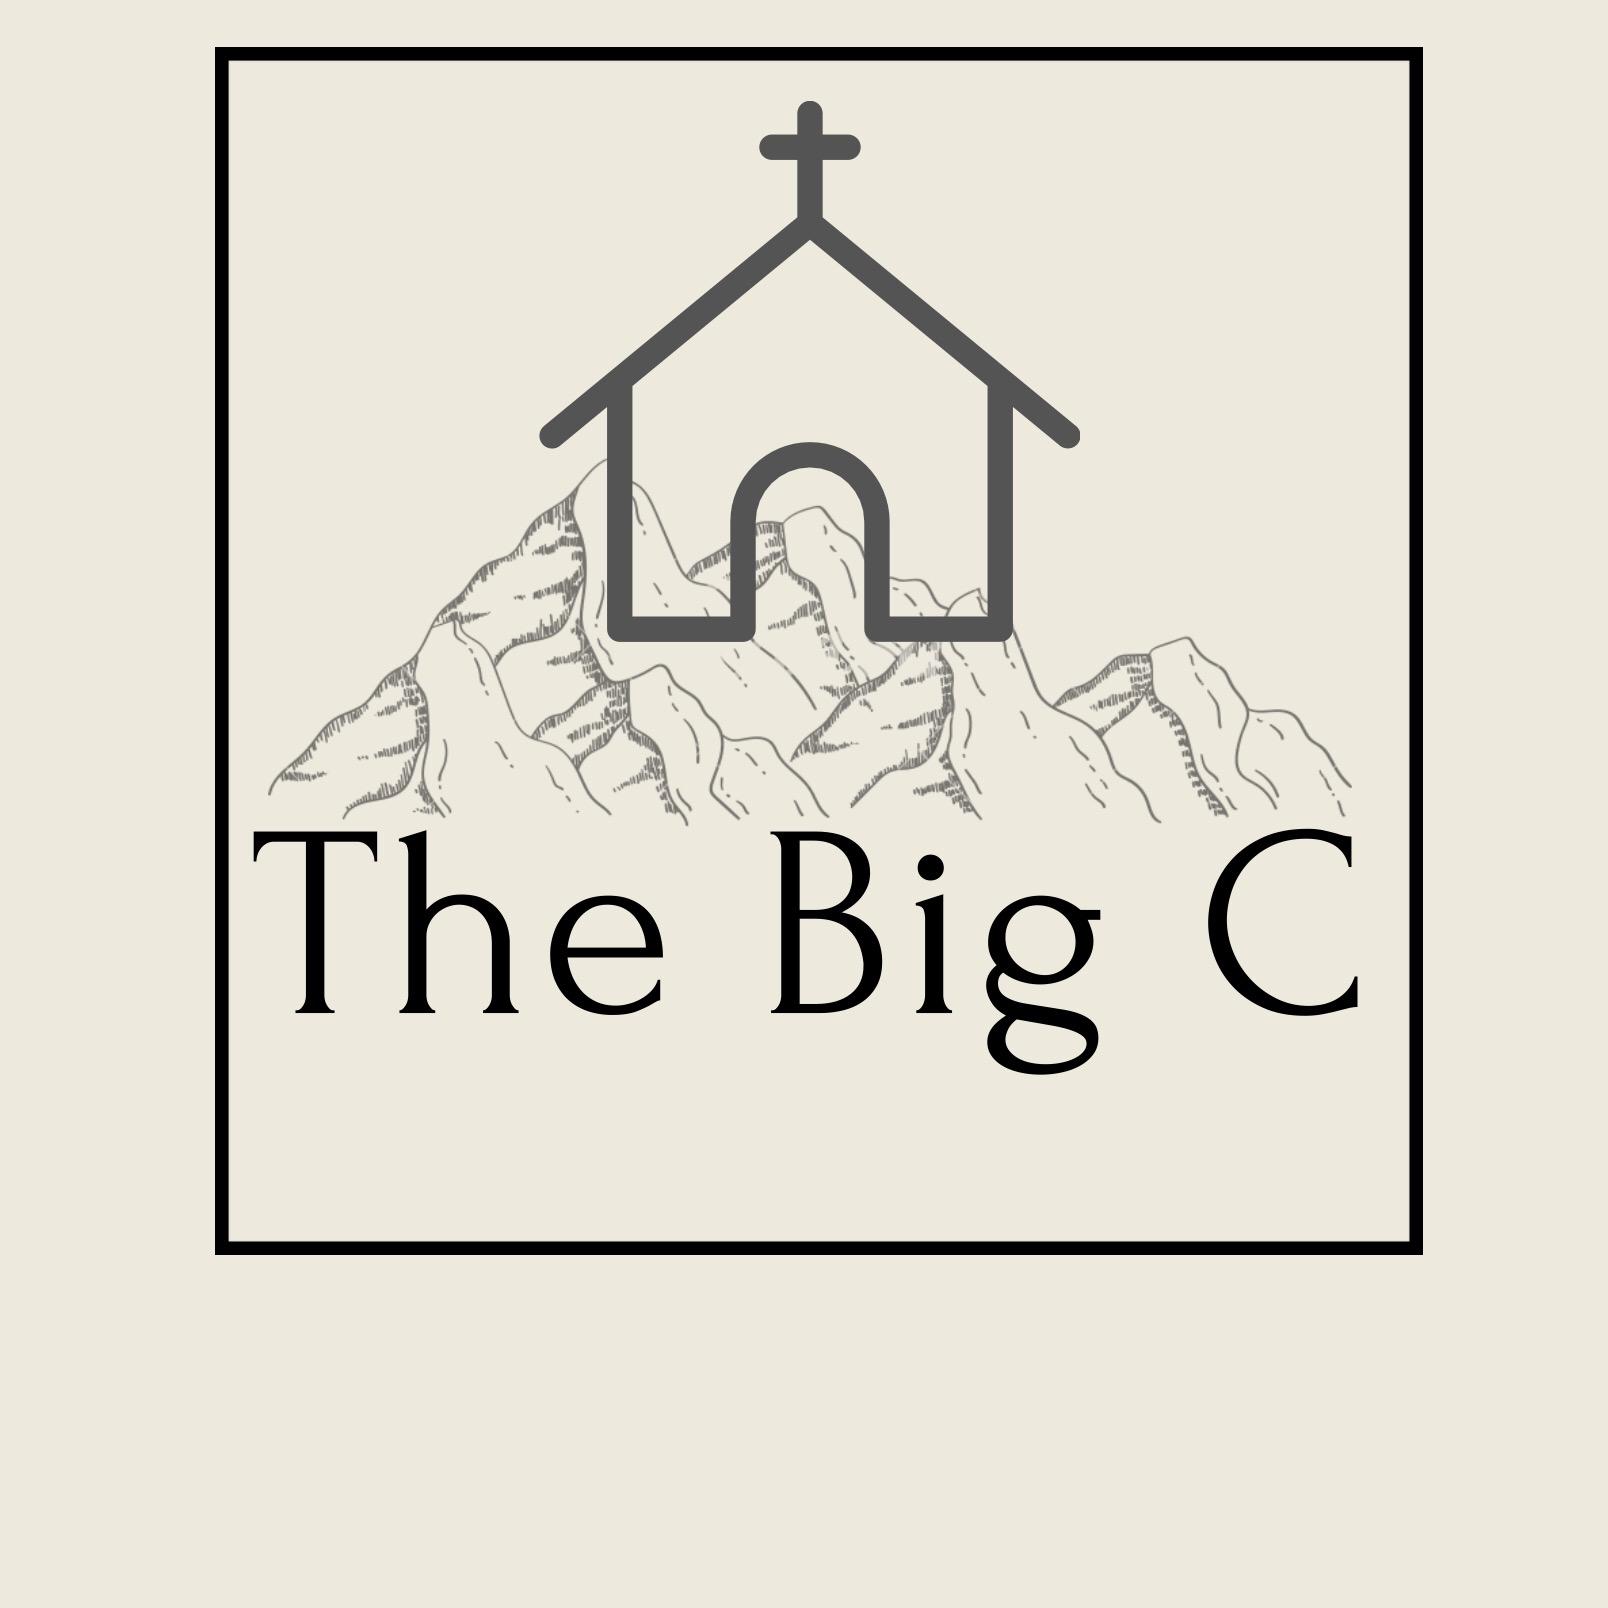 The big C